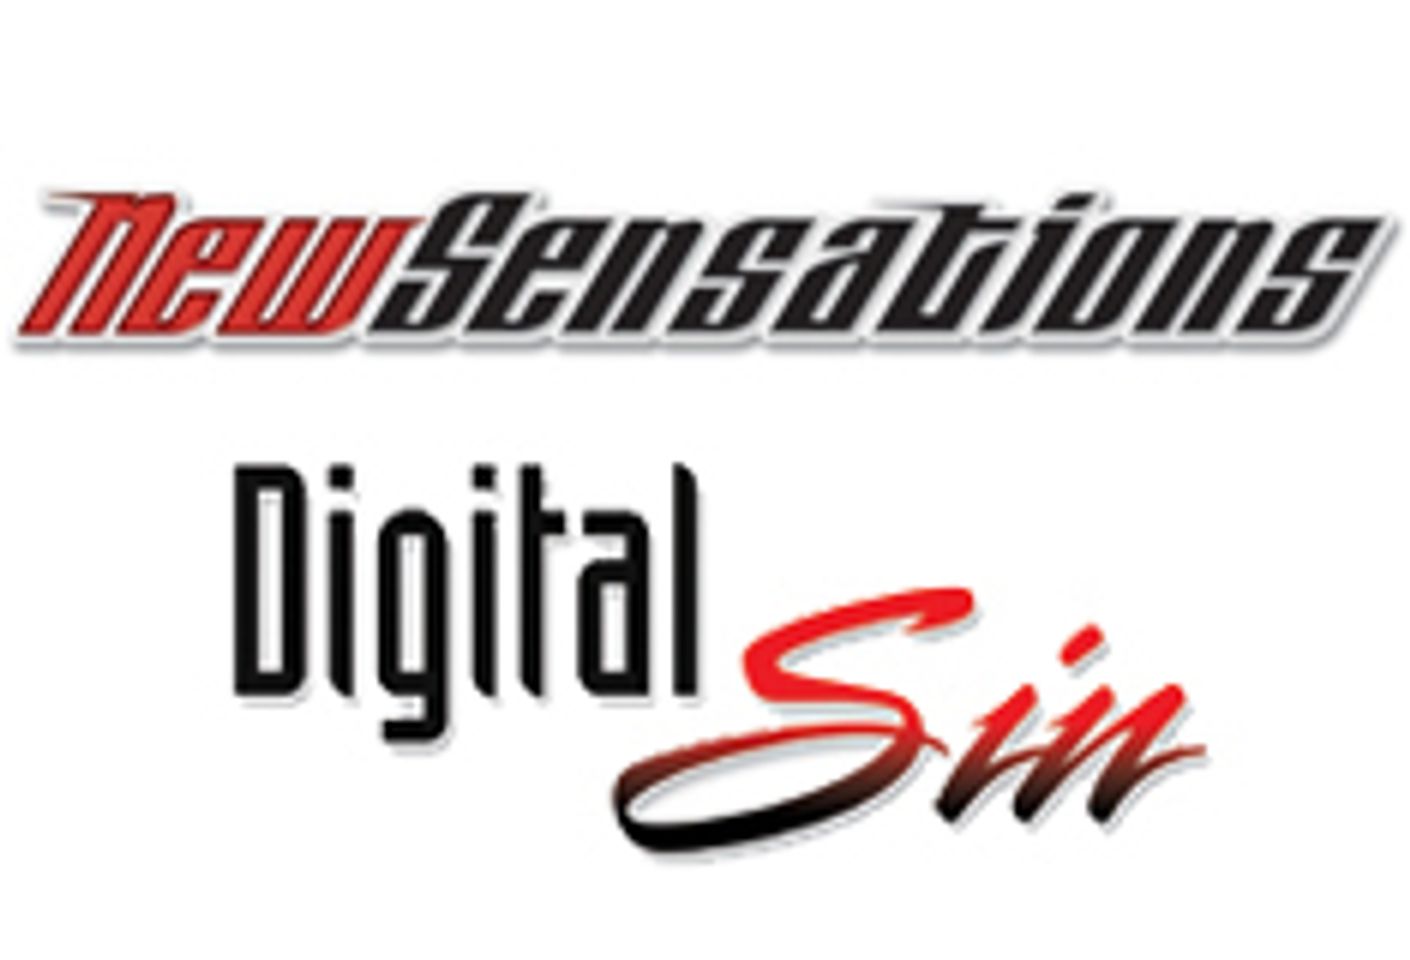 New Sensations/Digital Sin Receive 7 XRCO Award Nominations